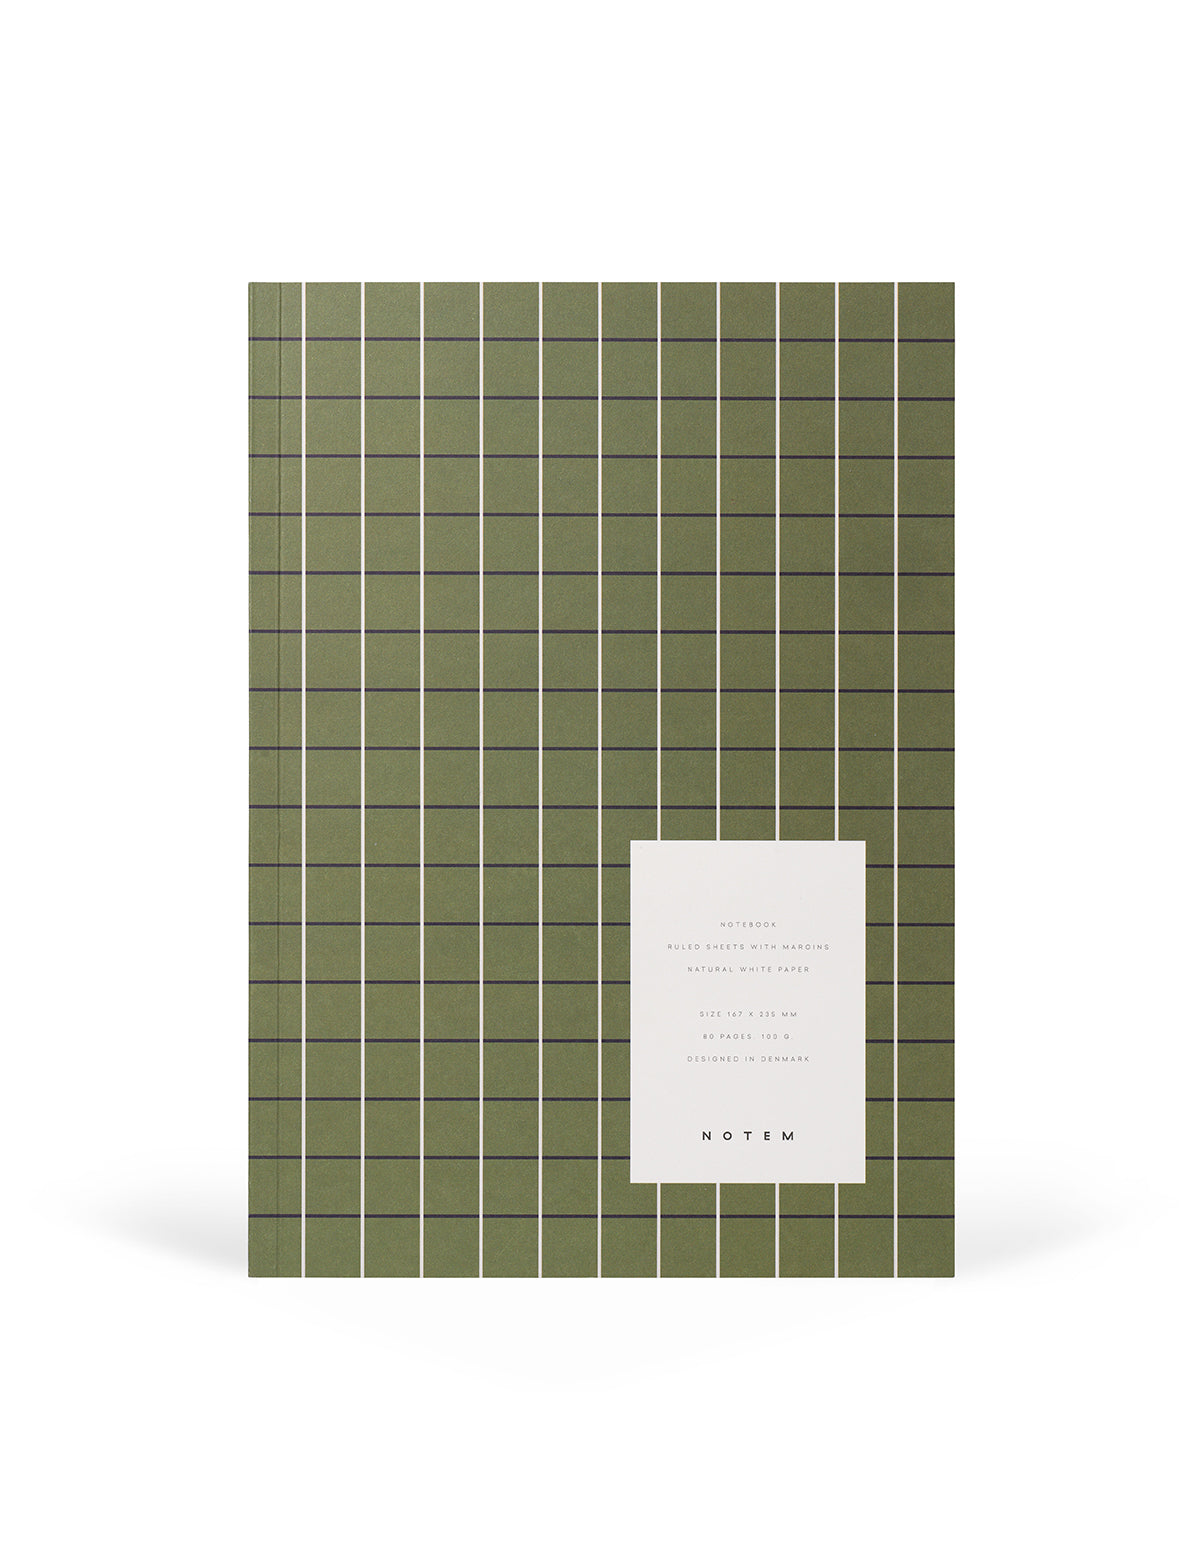 VITA | Medium Notebook | Green Grid Cover | Ruled Pages - Lifestory - Notem Studio